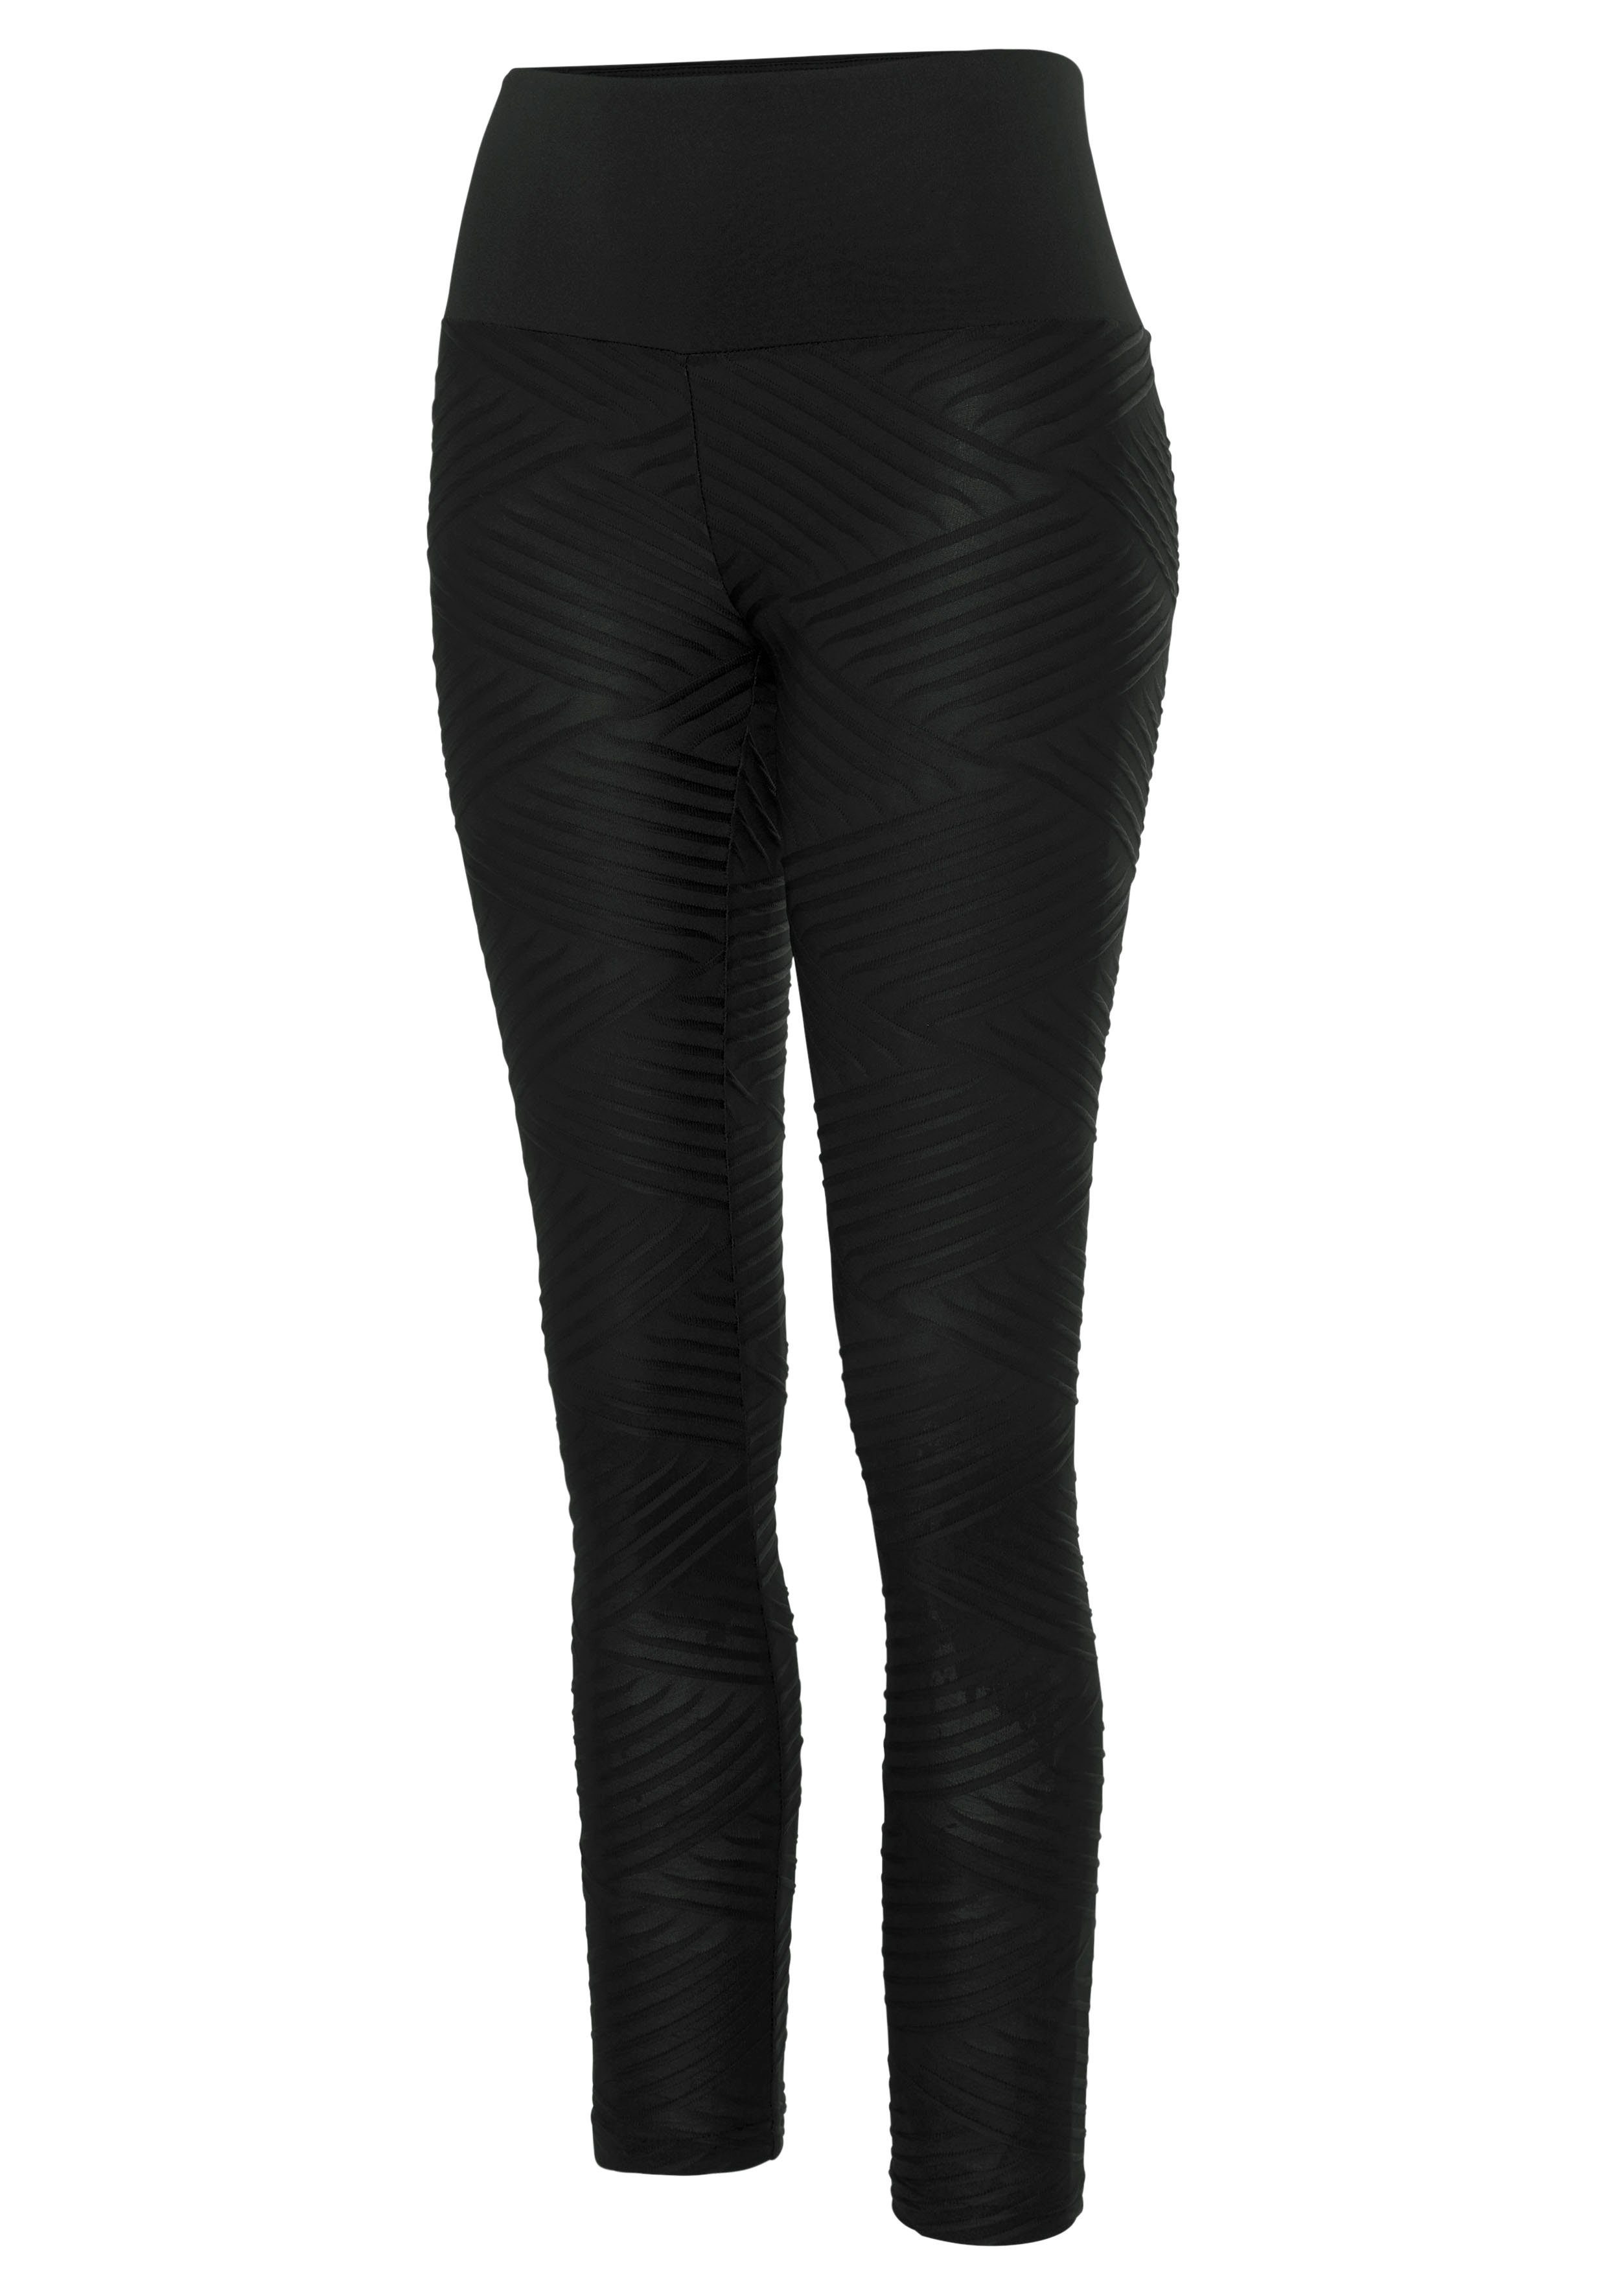 schwarz Loungewear mit ACTIVE -Sportleggings 3D-Struktur, LASCANA Leggings